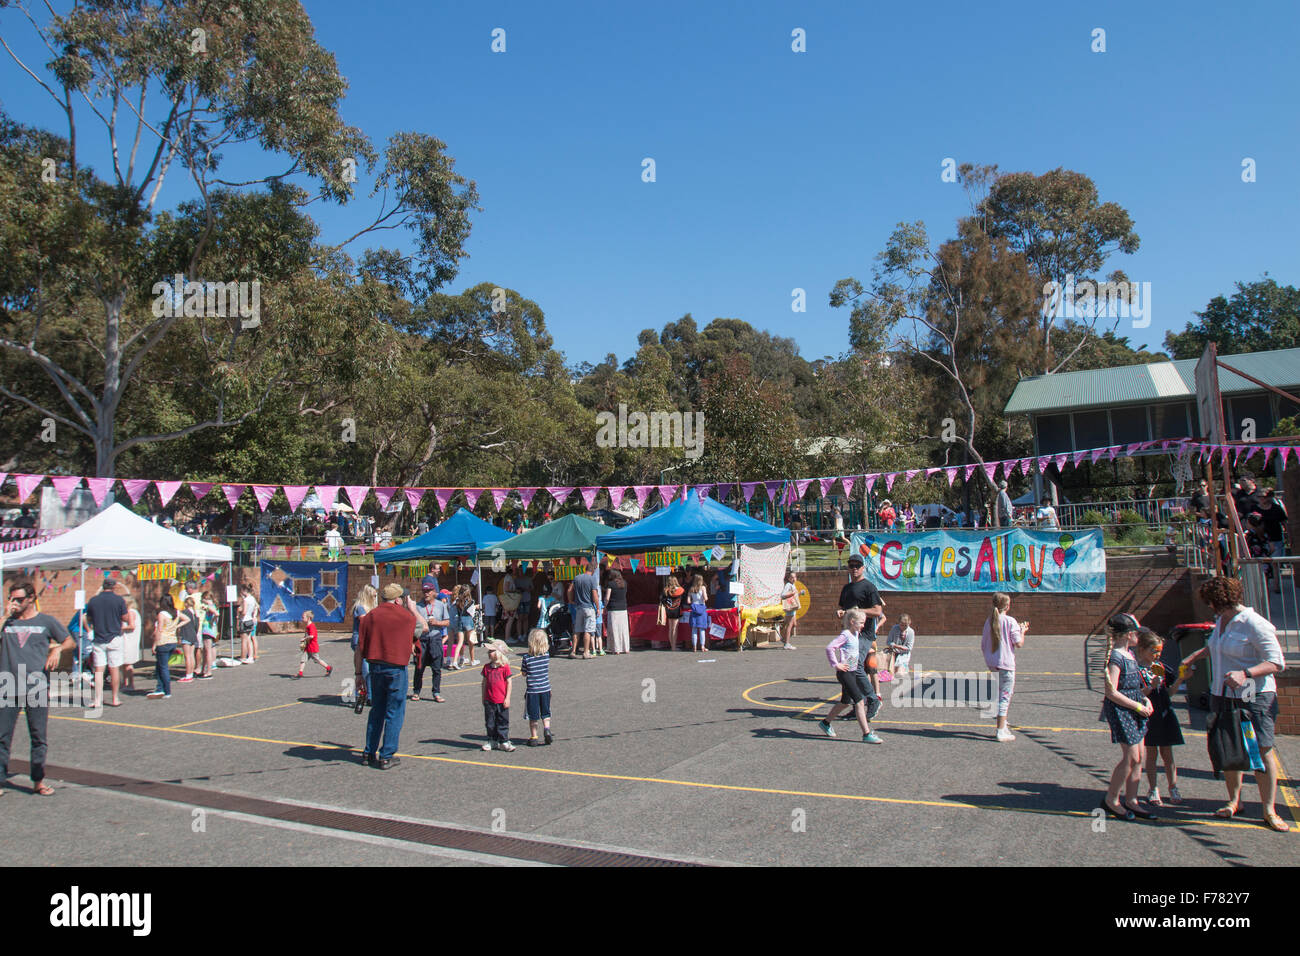 Sydney school fete fair on a blue sky day, New south wales, Australia Stock Photo